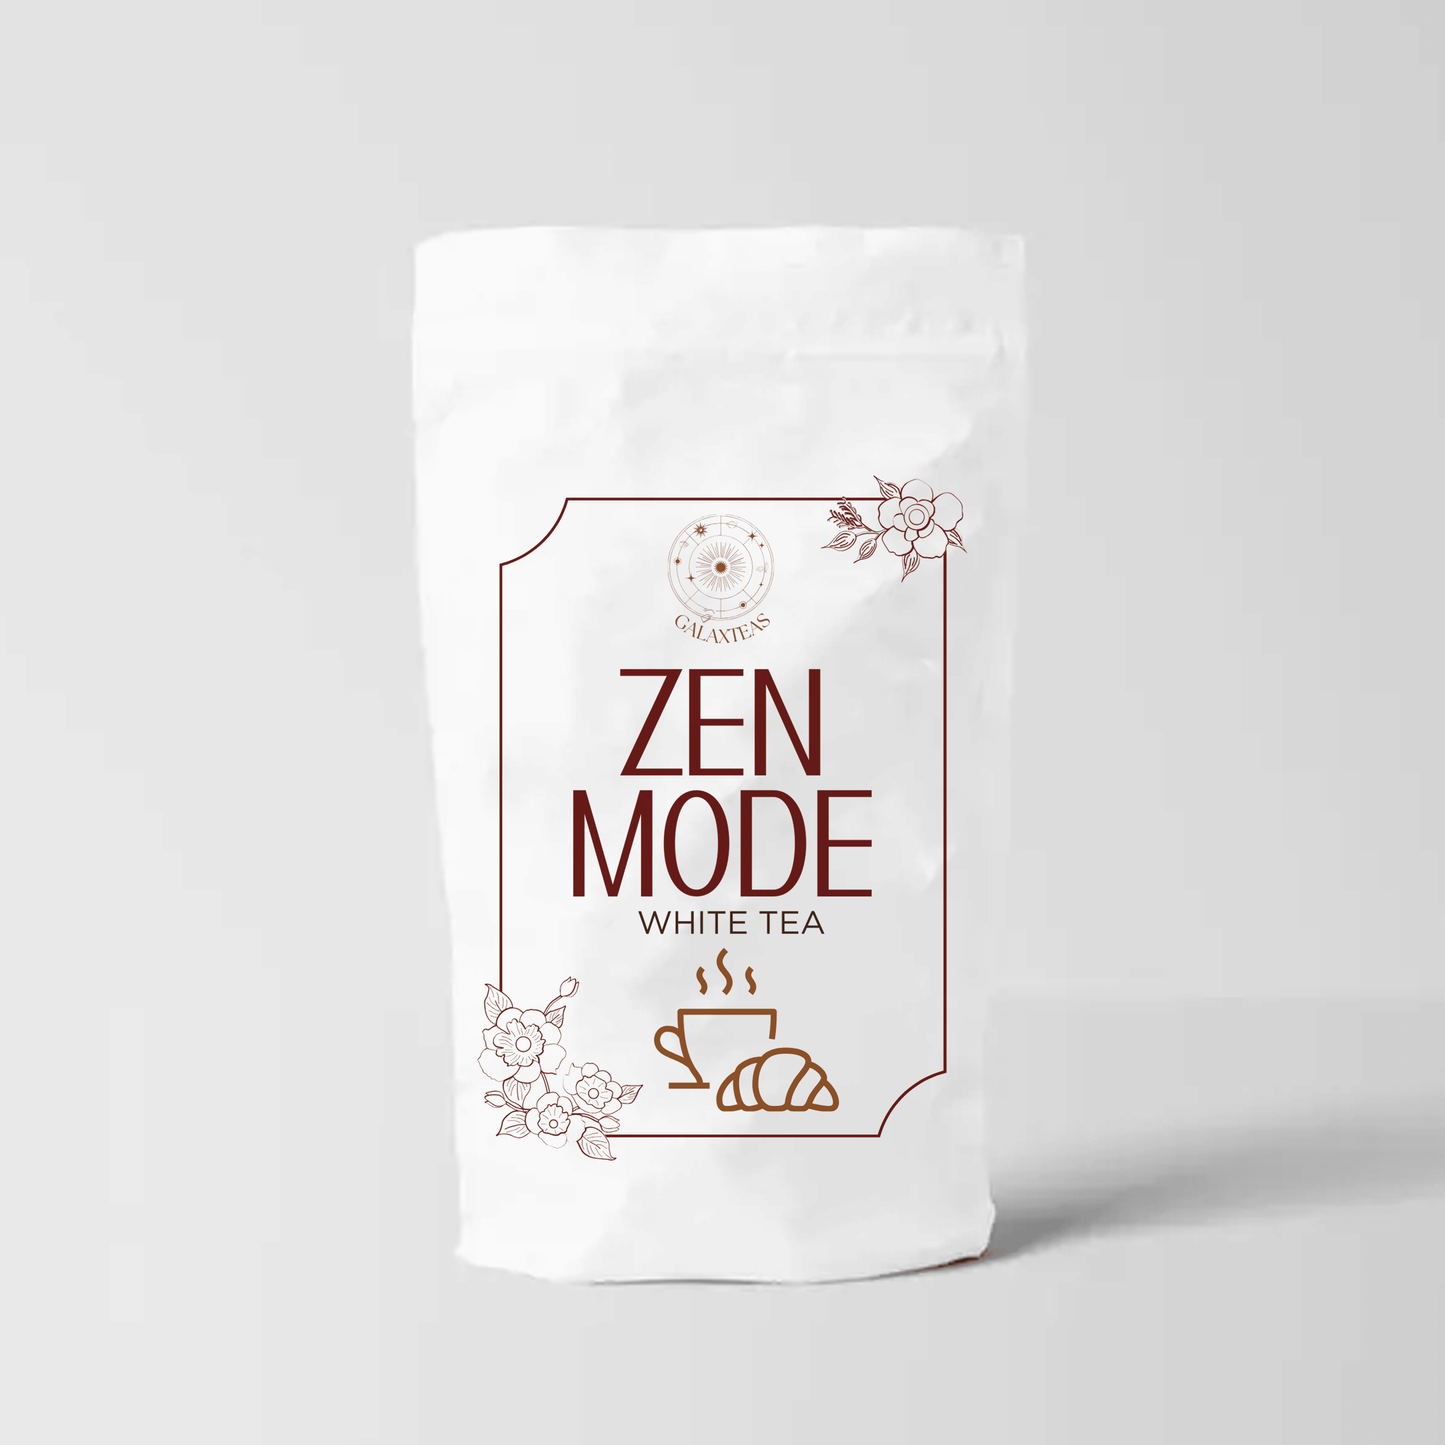 Zen Mode White Tea